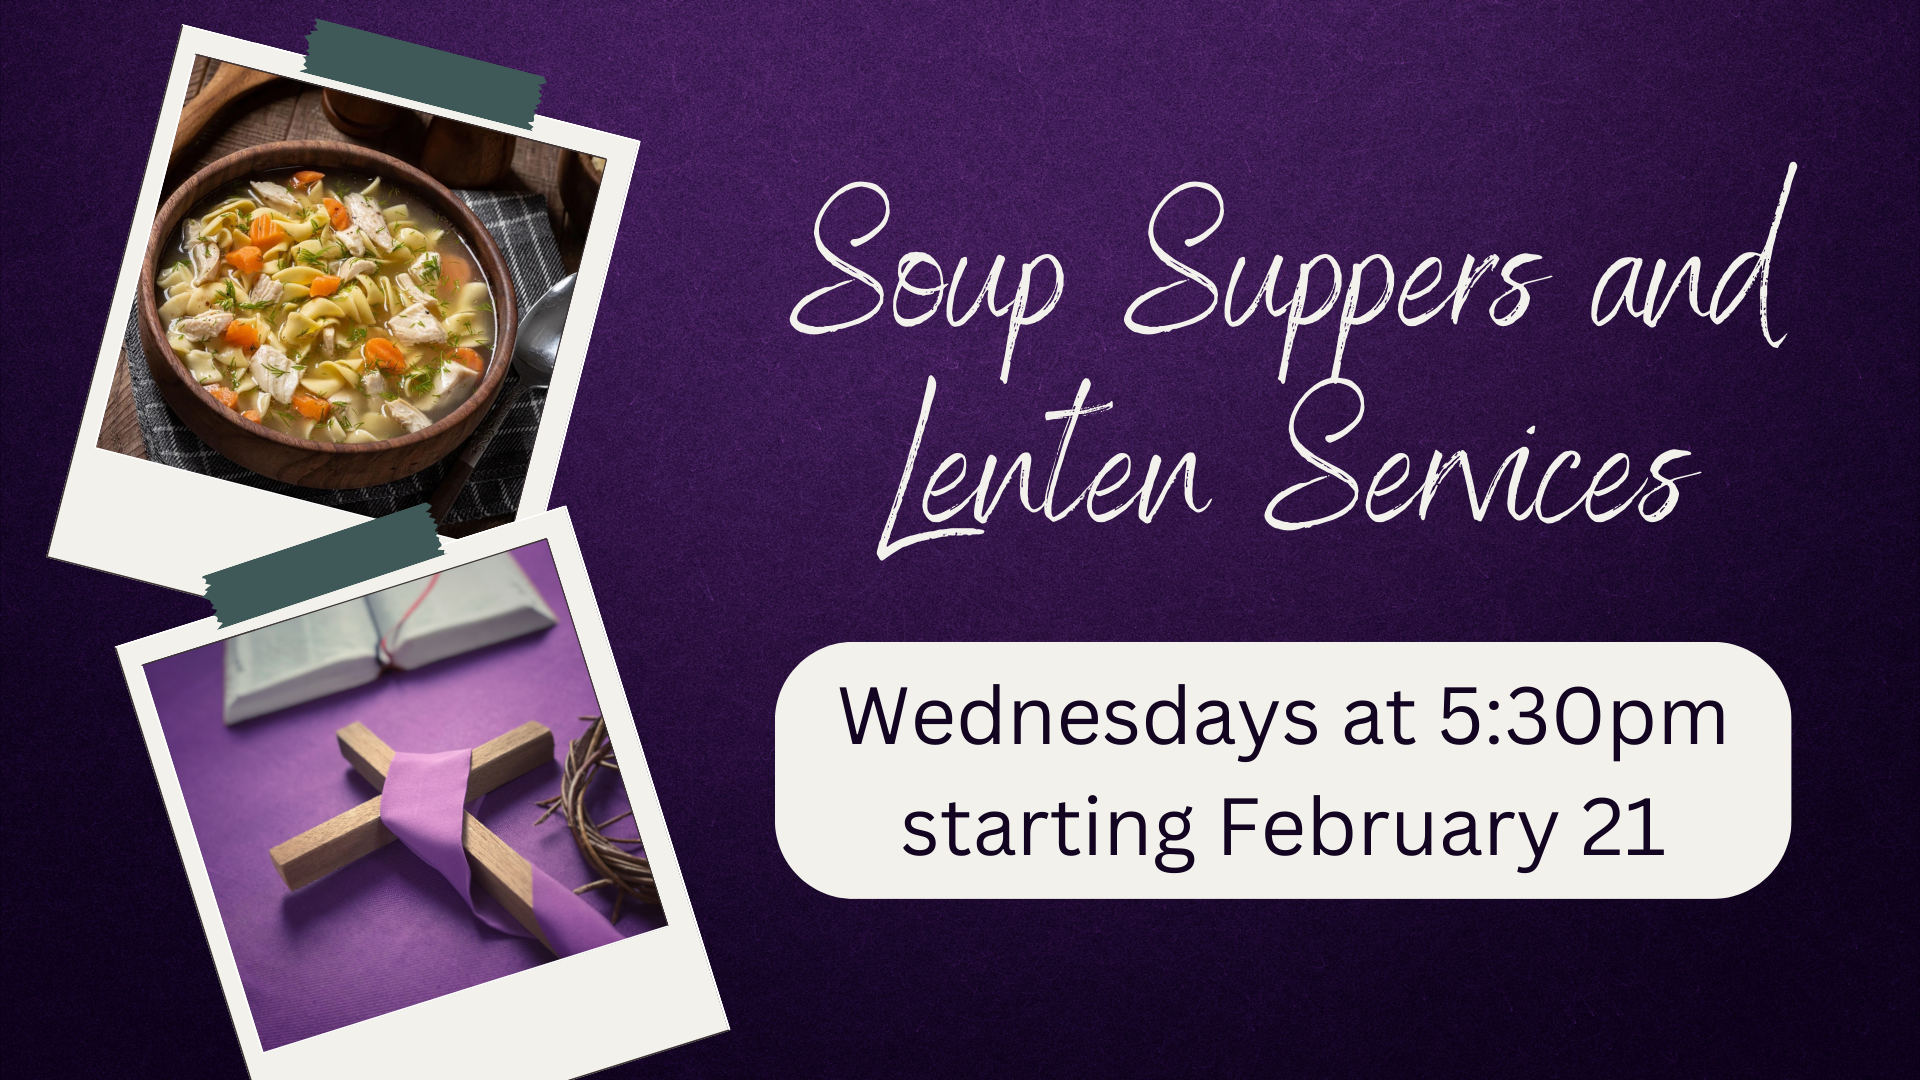 Soup Supper and Lenten Service image